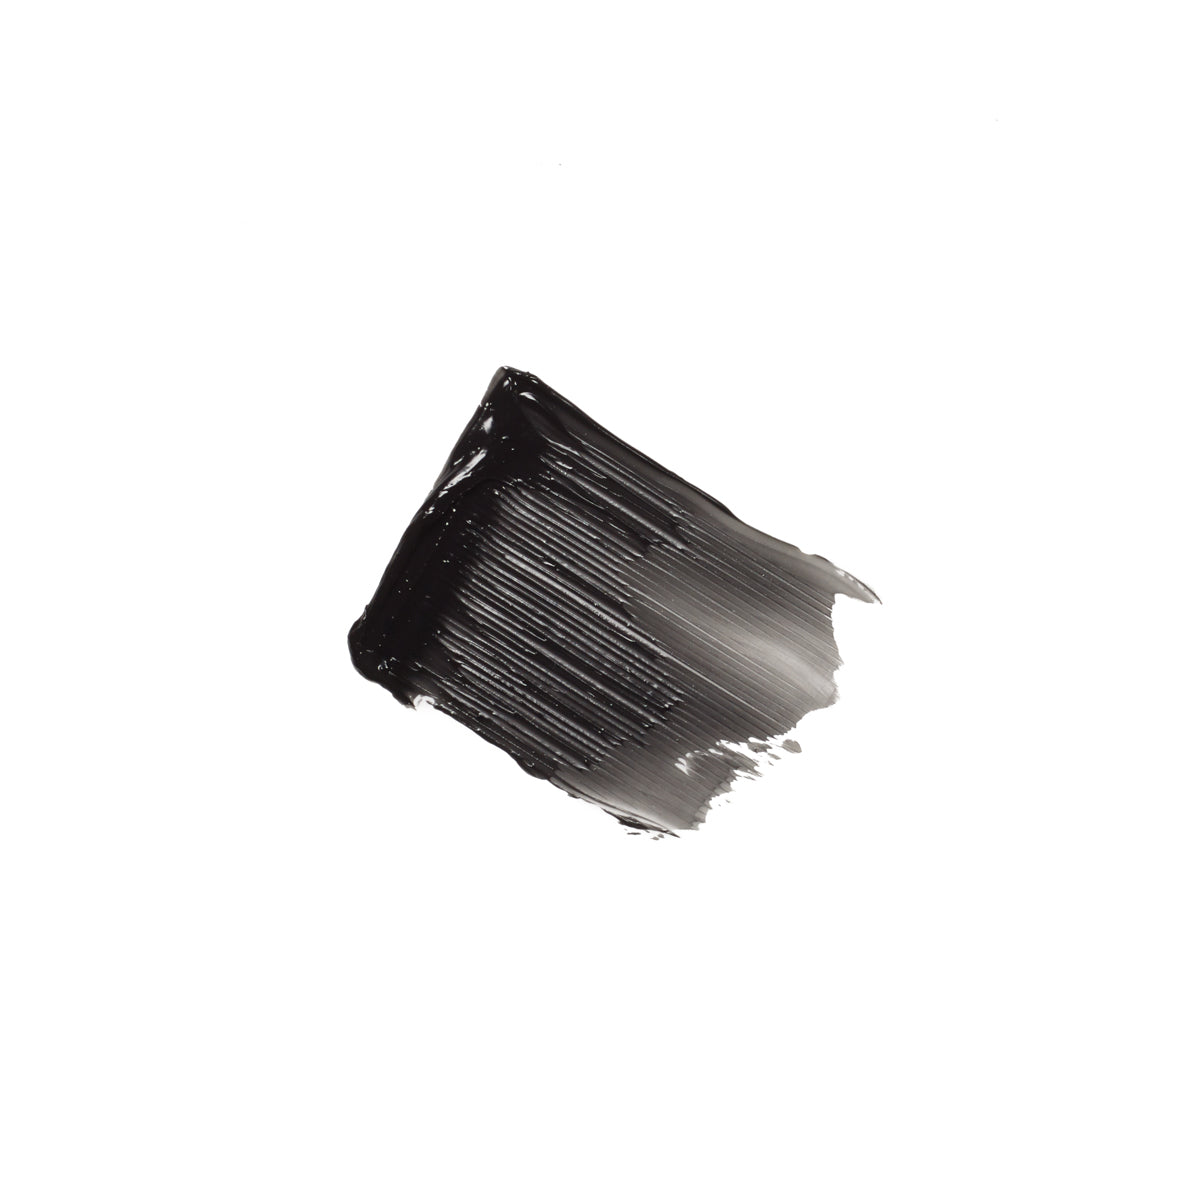 Noir Lash Tint smooth intense-black formula